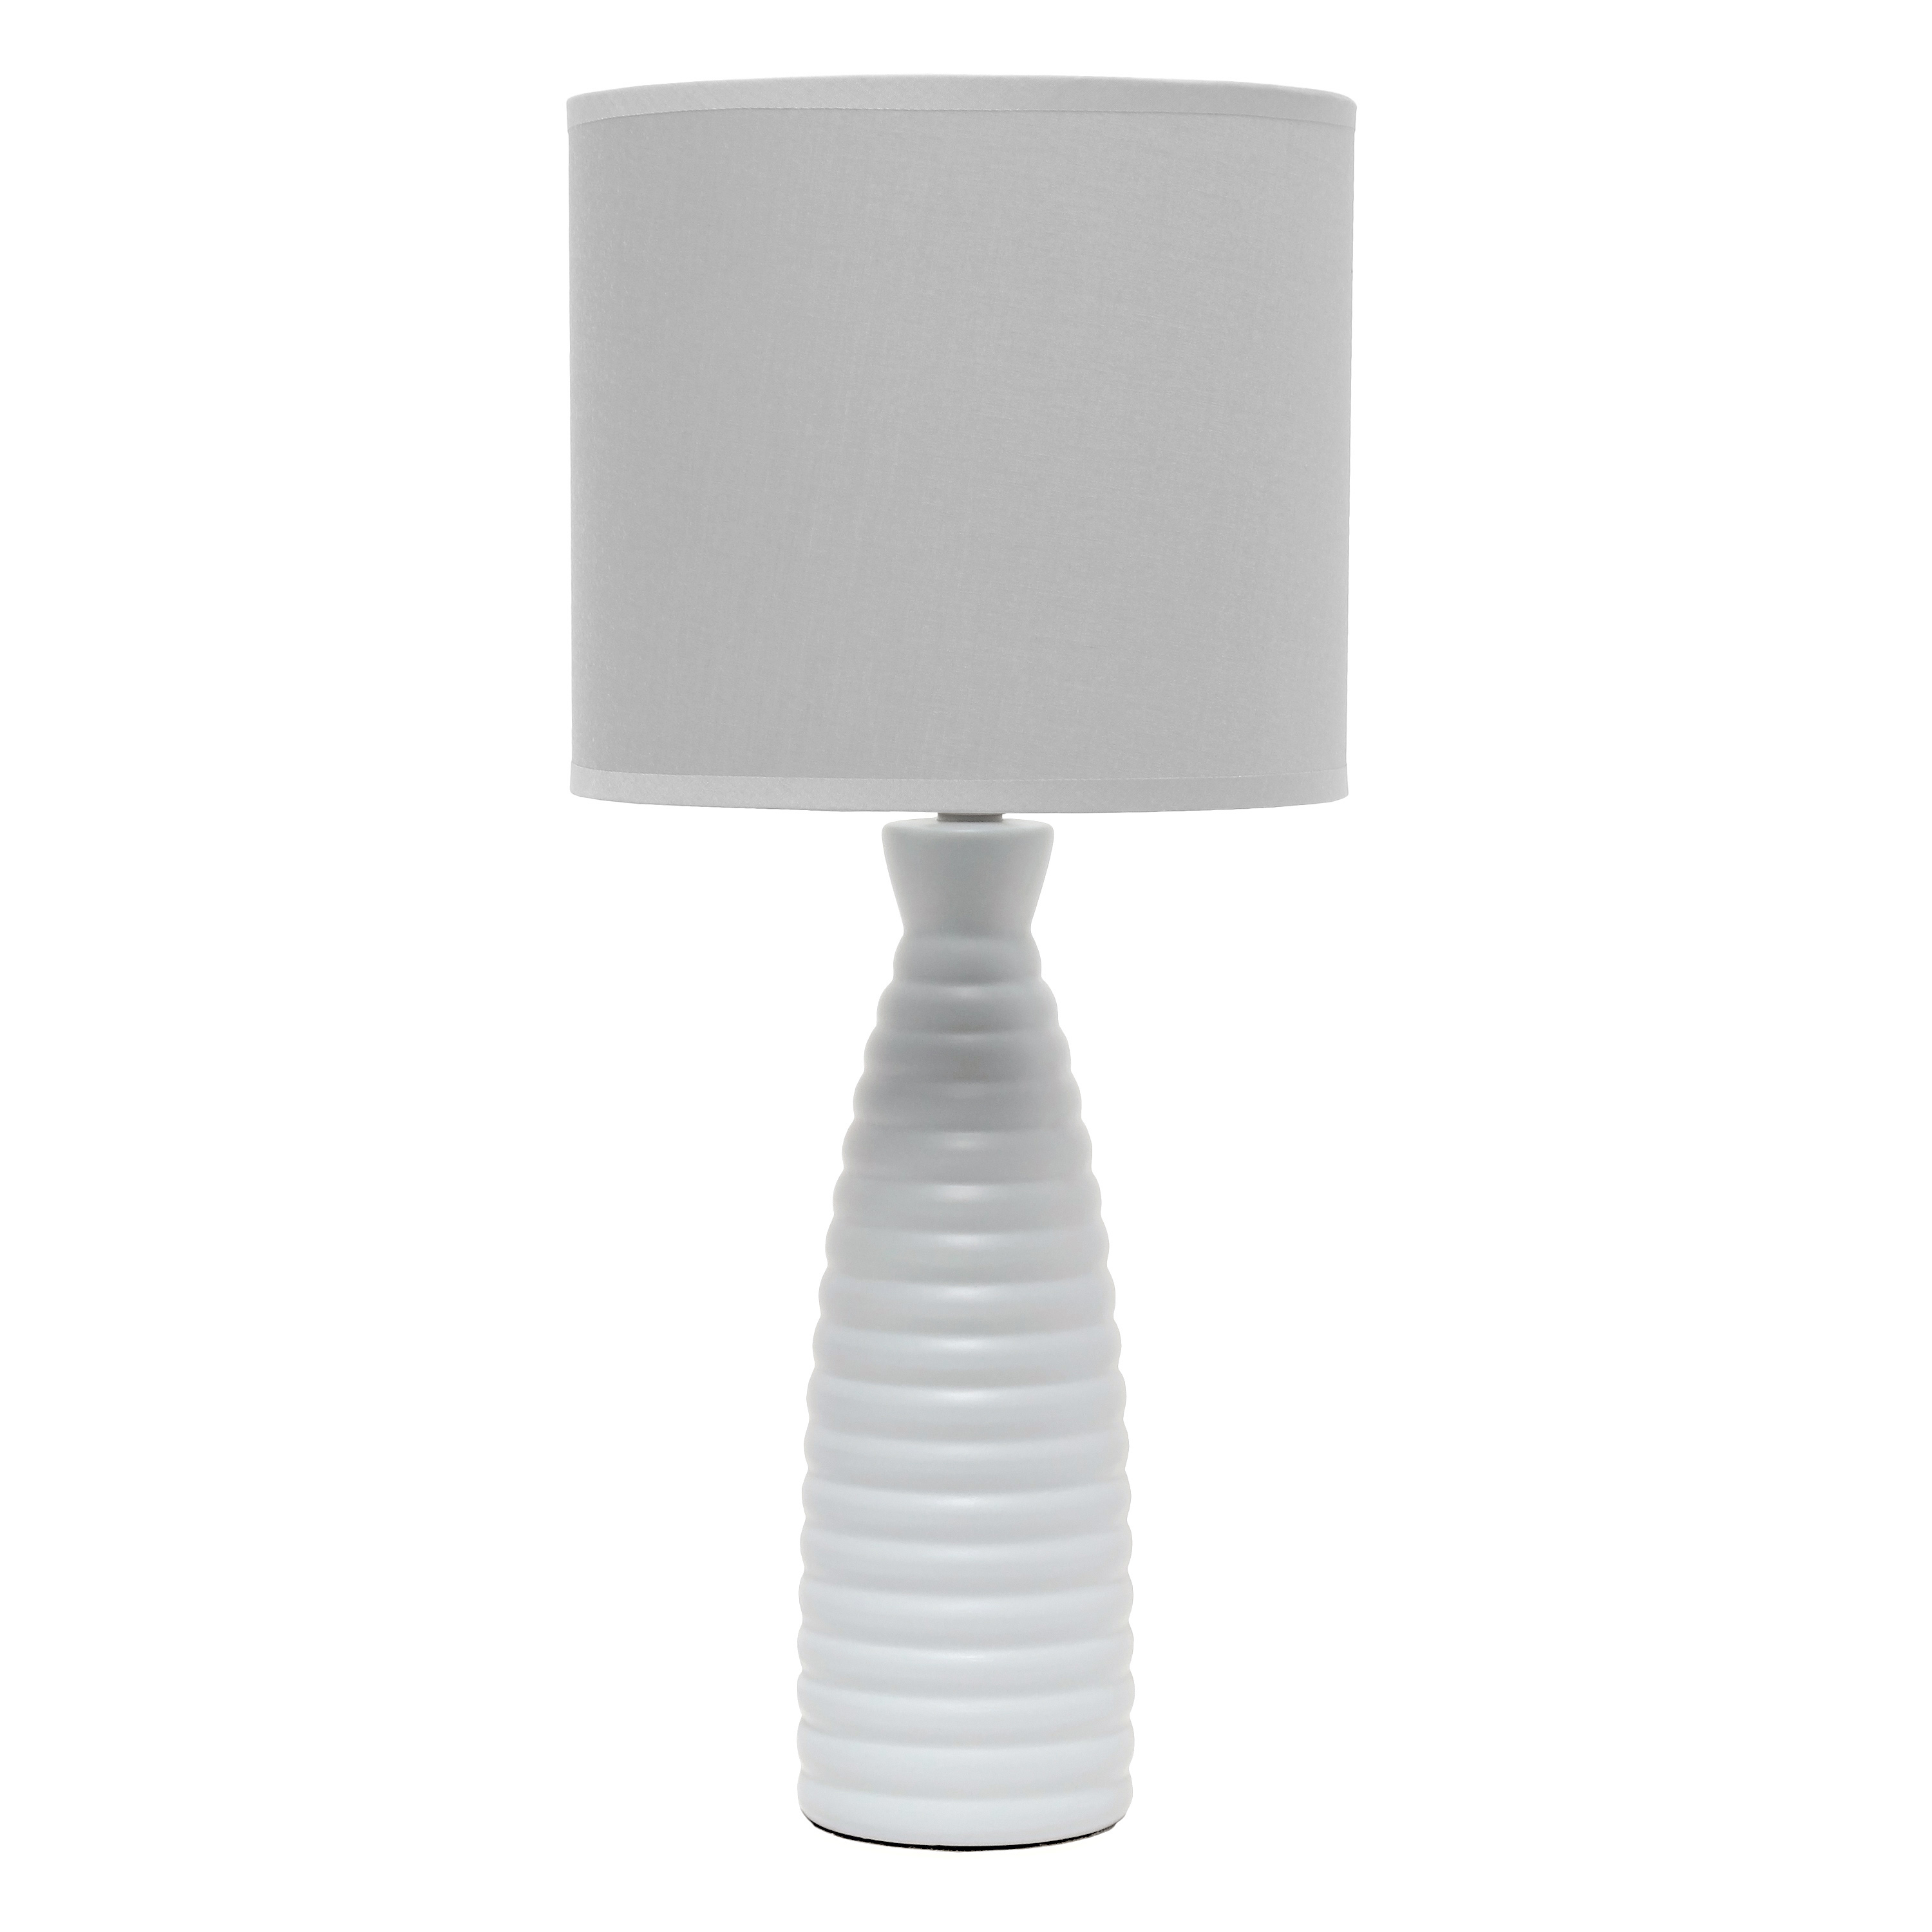 Simple Designs Alsace Bottle Table Lamp, Gray